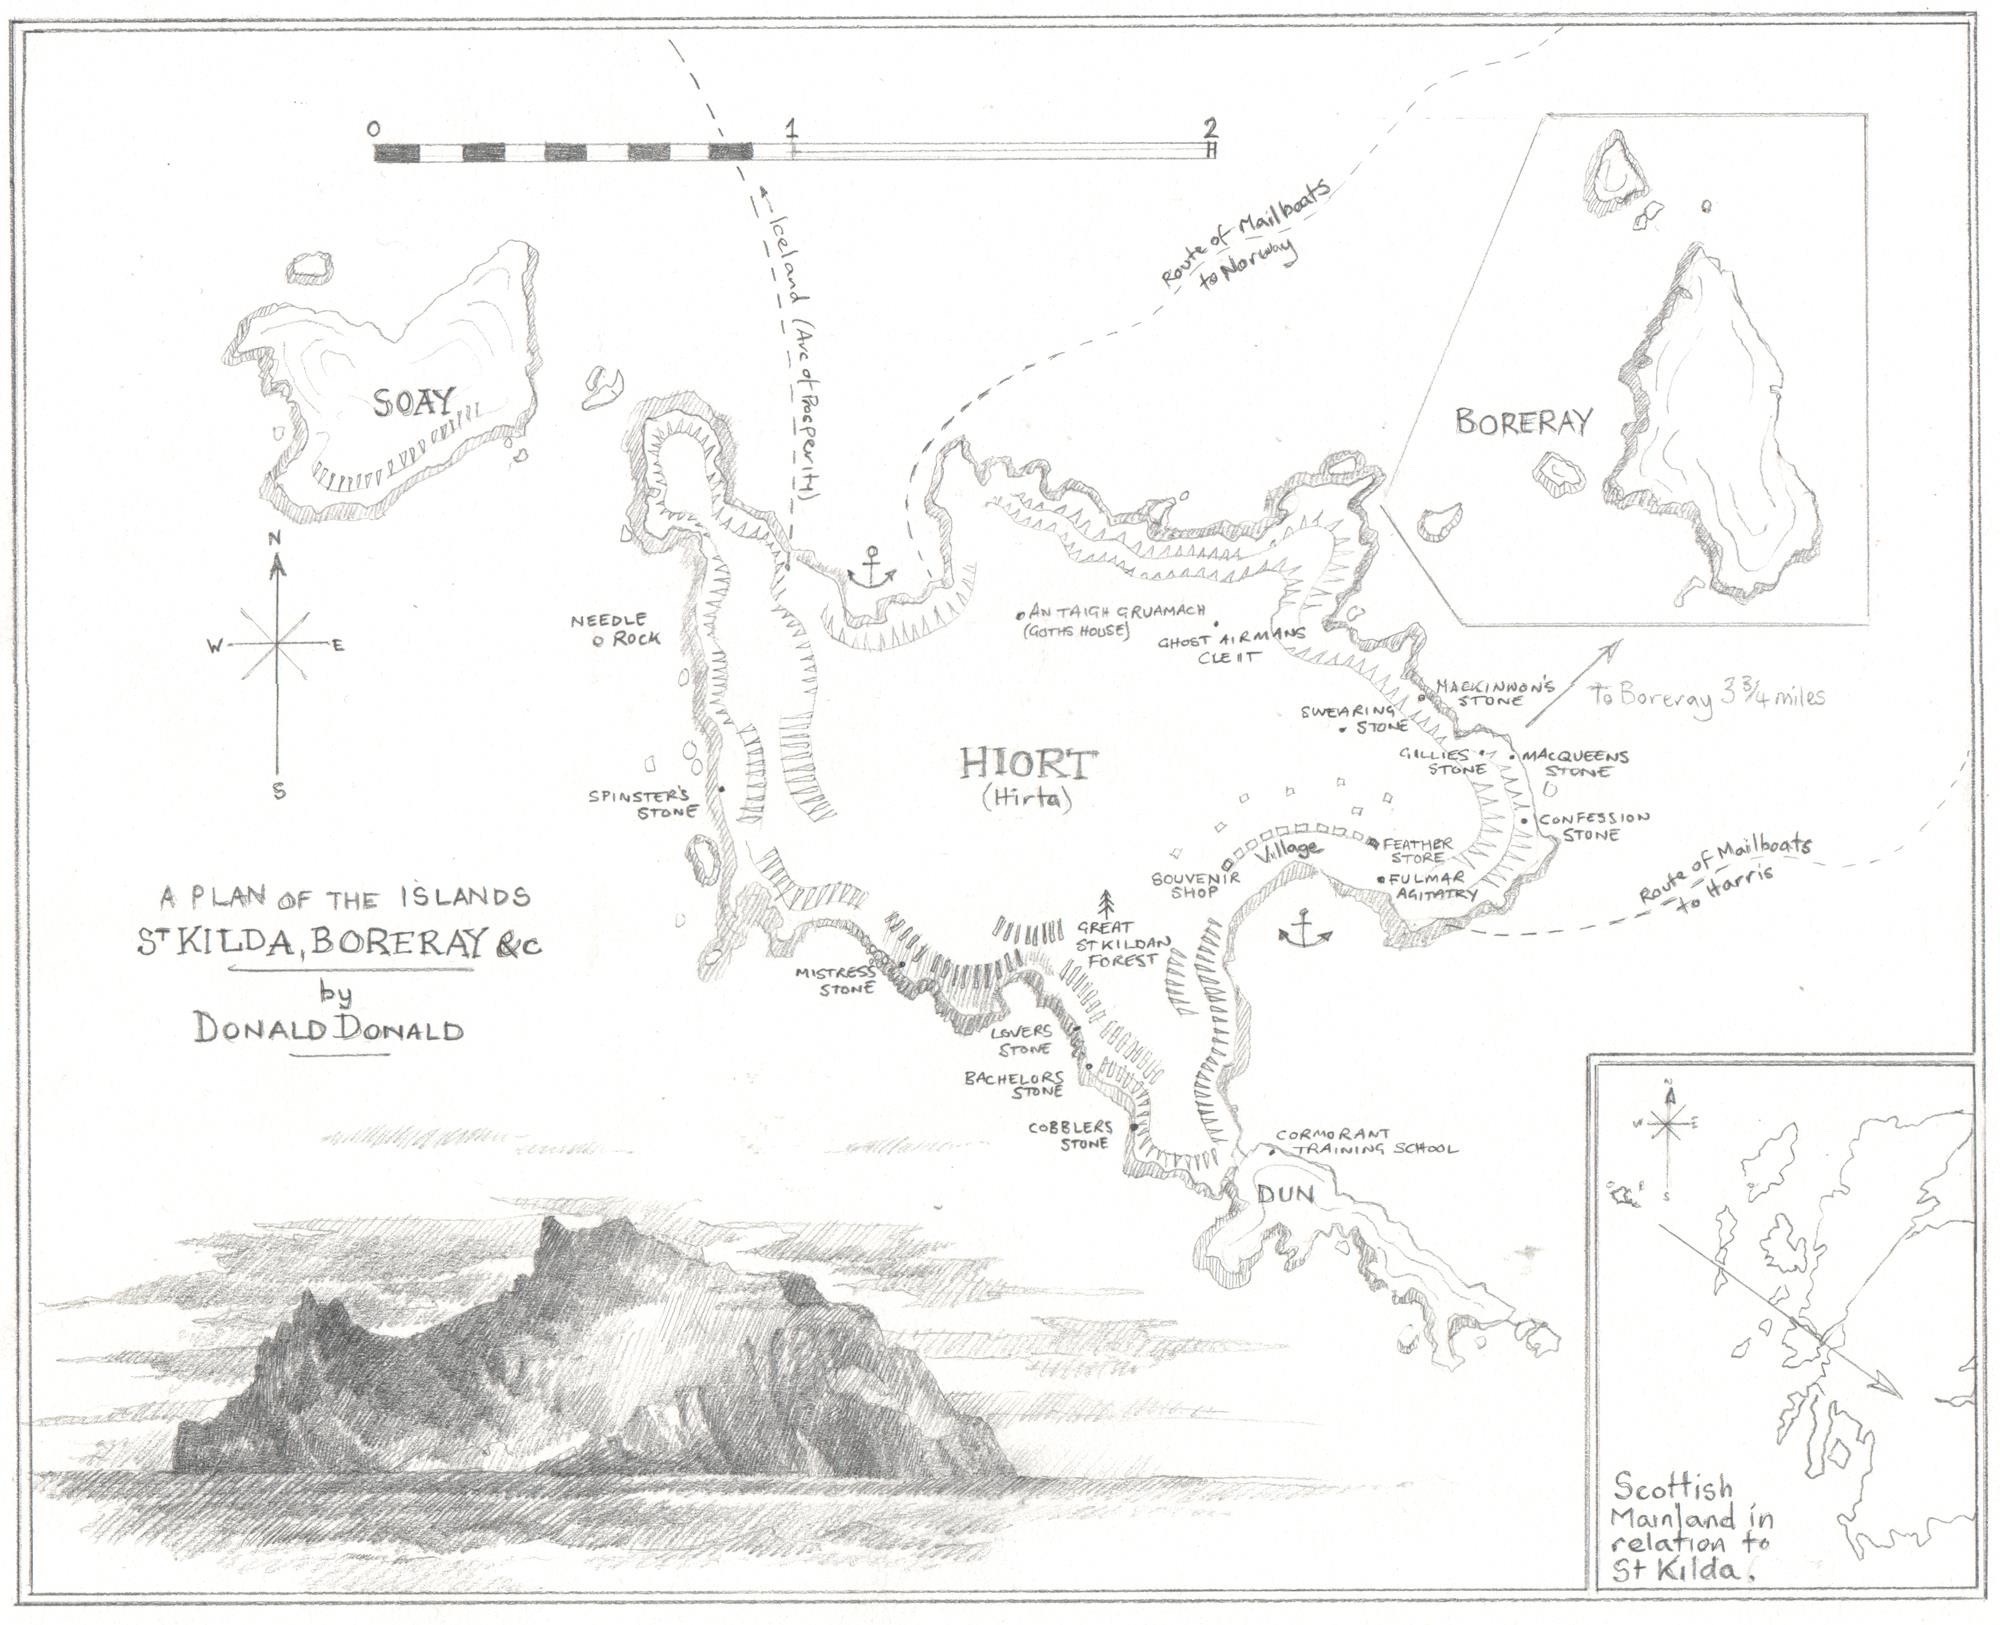  'Donald Donald's Map of St.Kilda' 